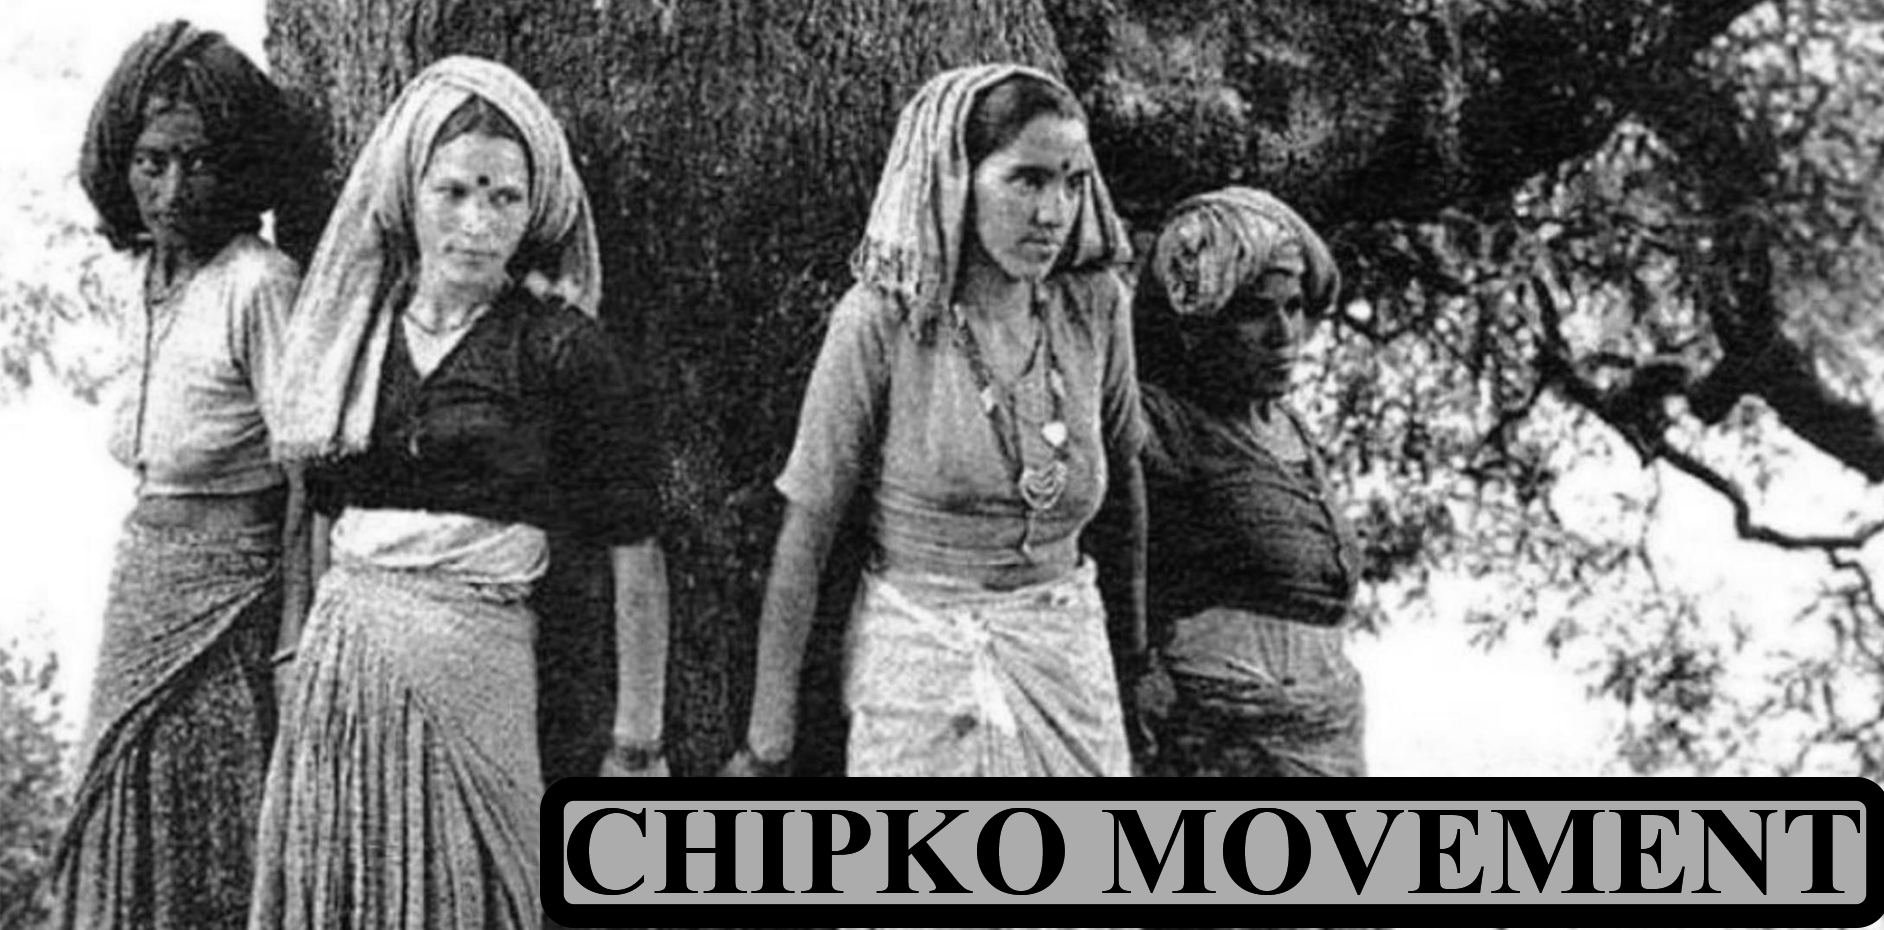 Sundarlal Bahuguna Face Of Chipko Movement Dies Of Covid Pm Says Monumental Loss